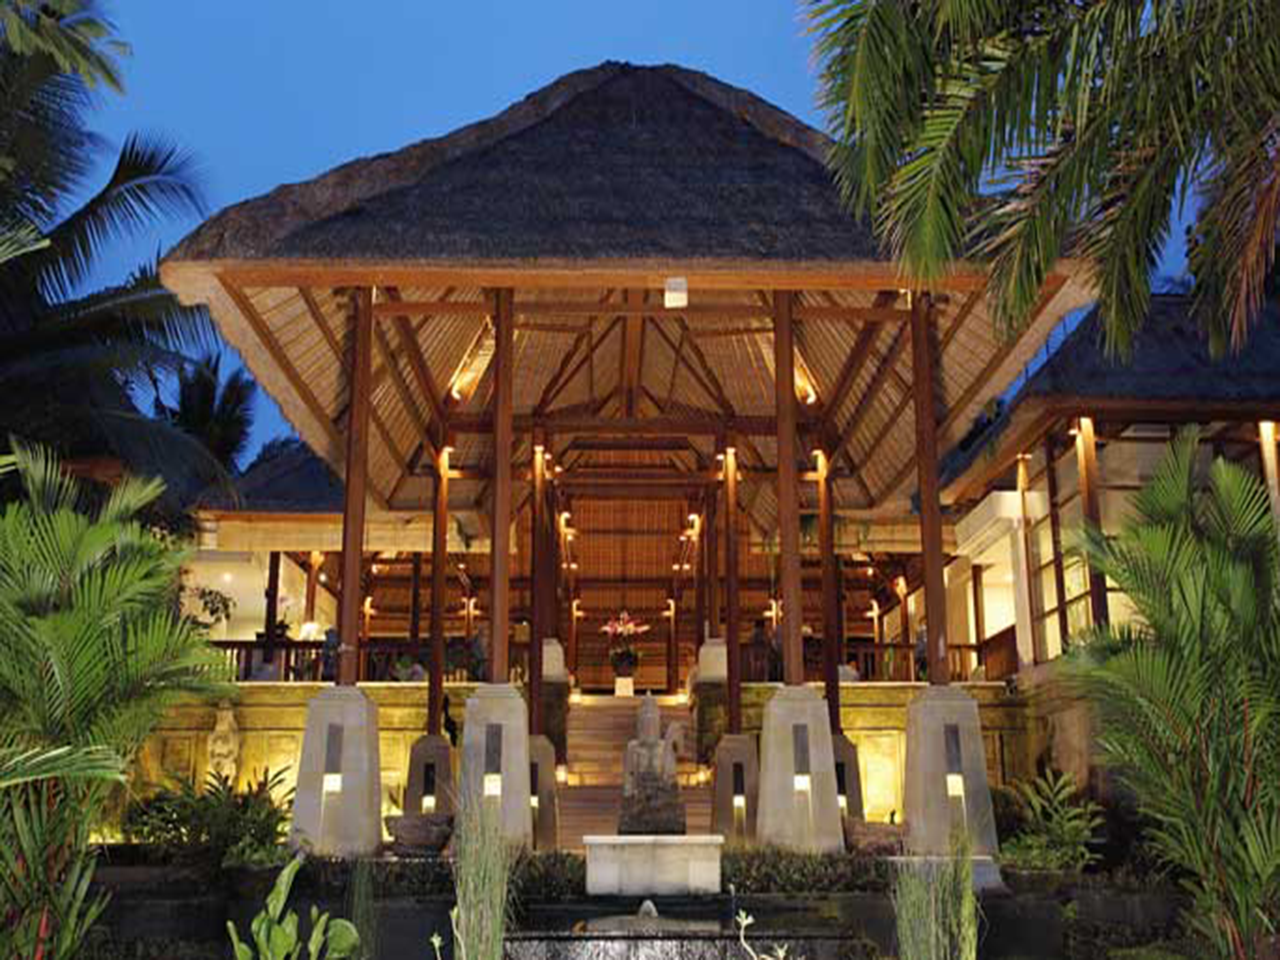 
The Ubud Village Resort & Spa